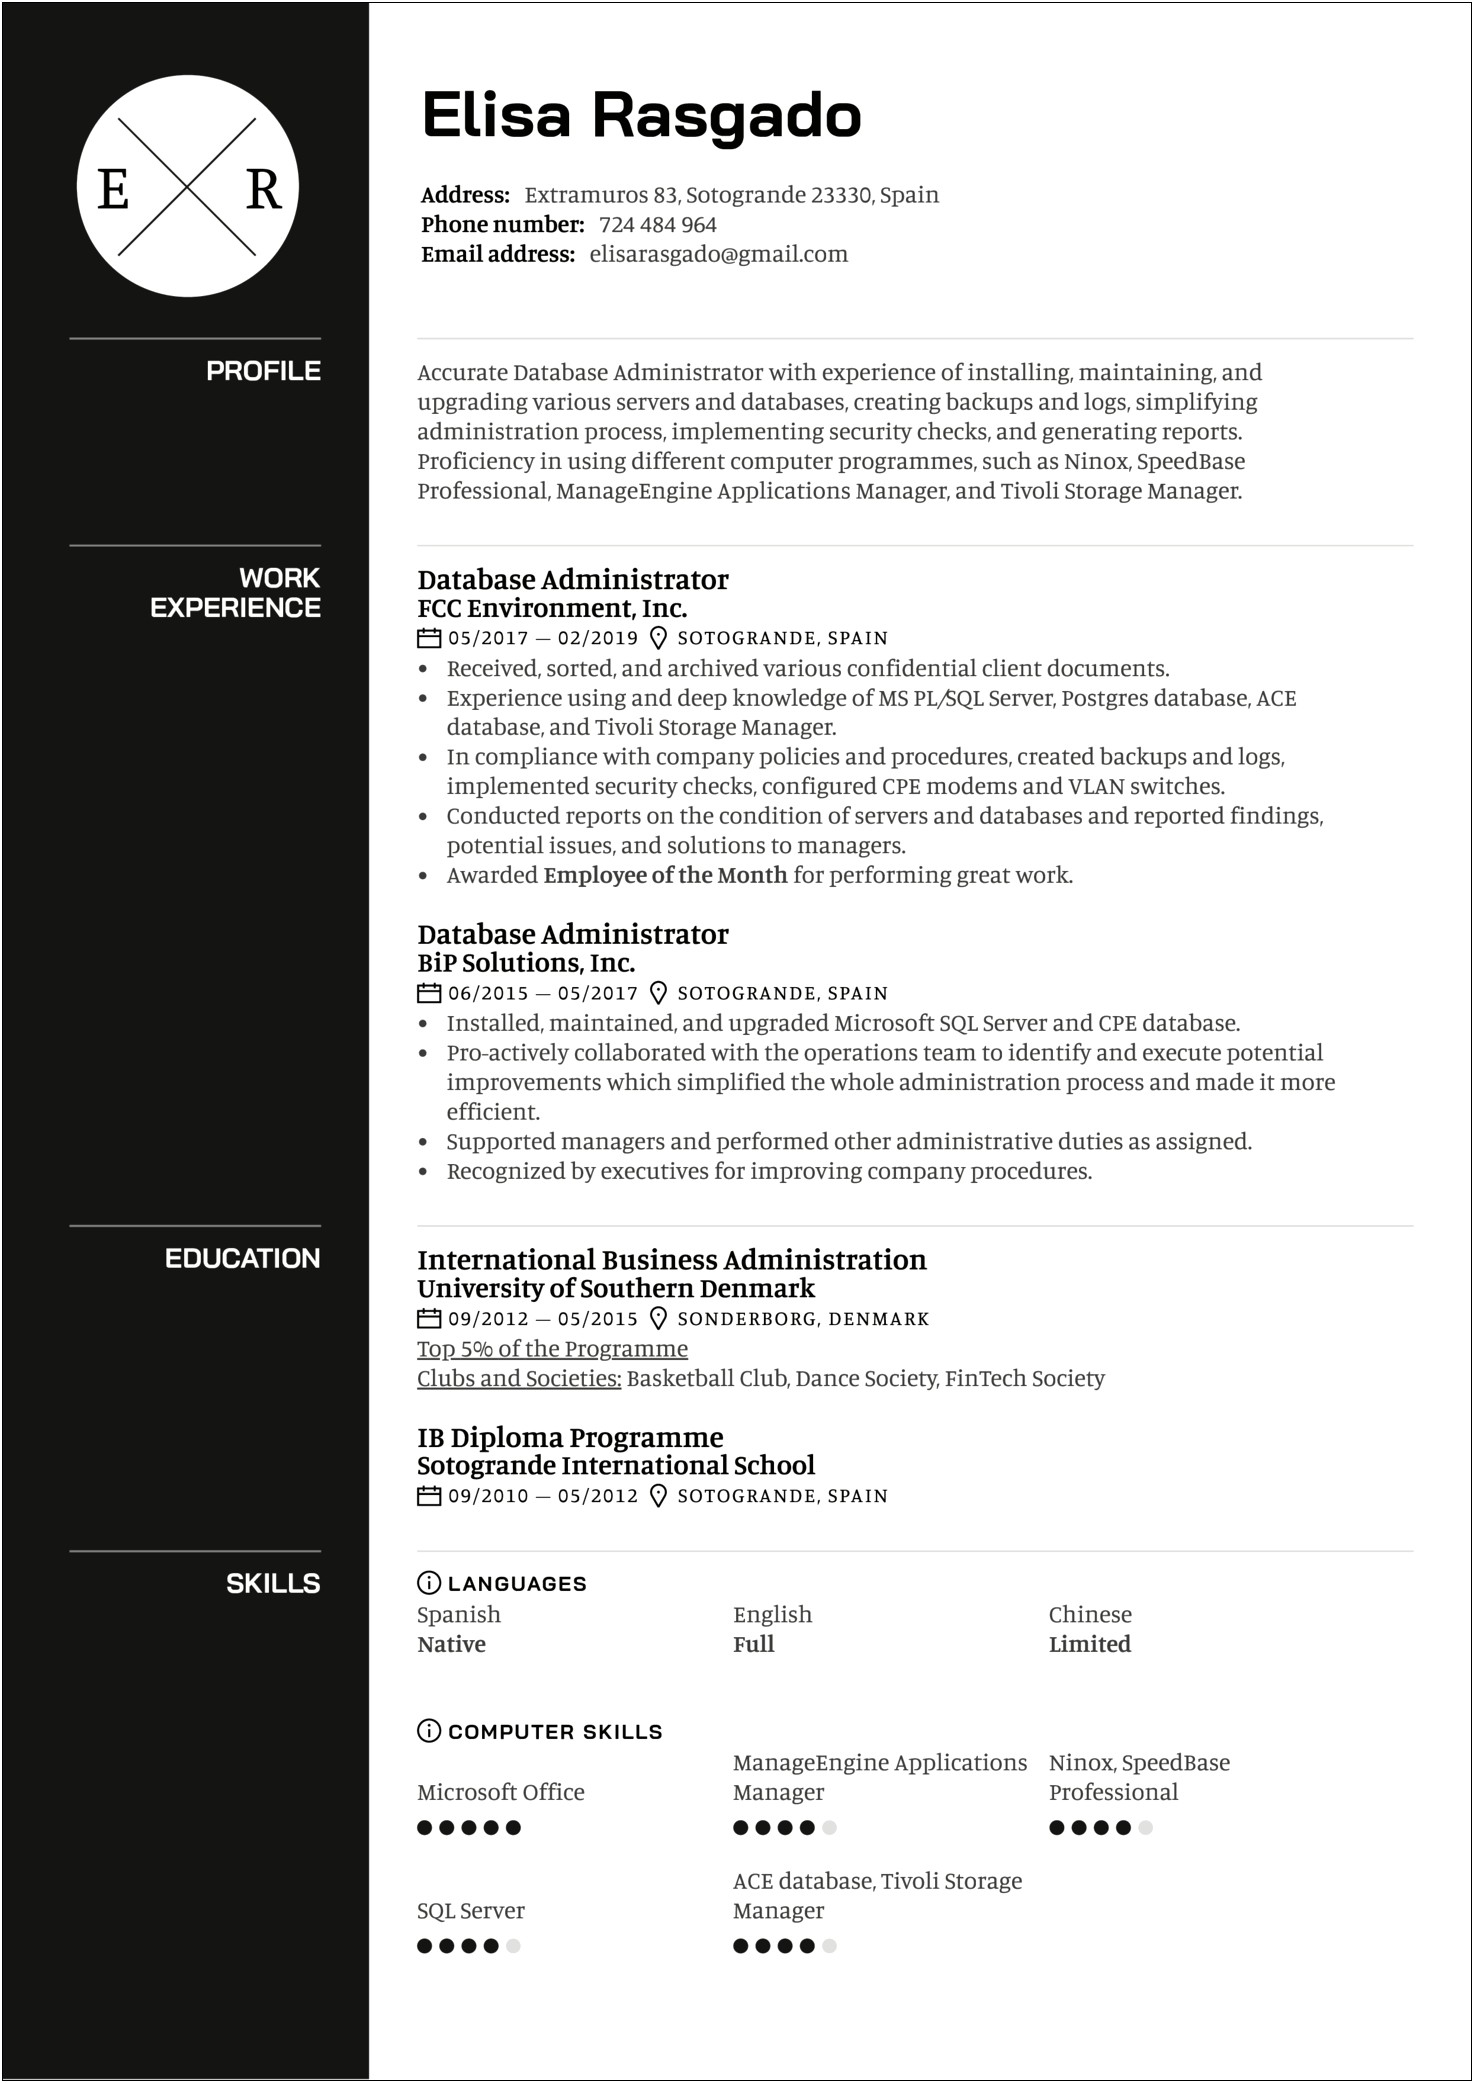 Sample Resume For Sql Server Job